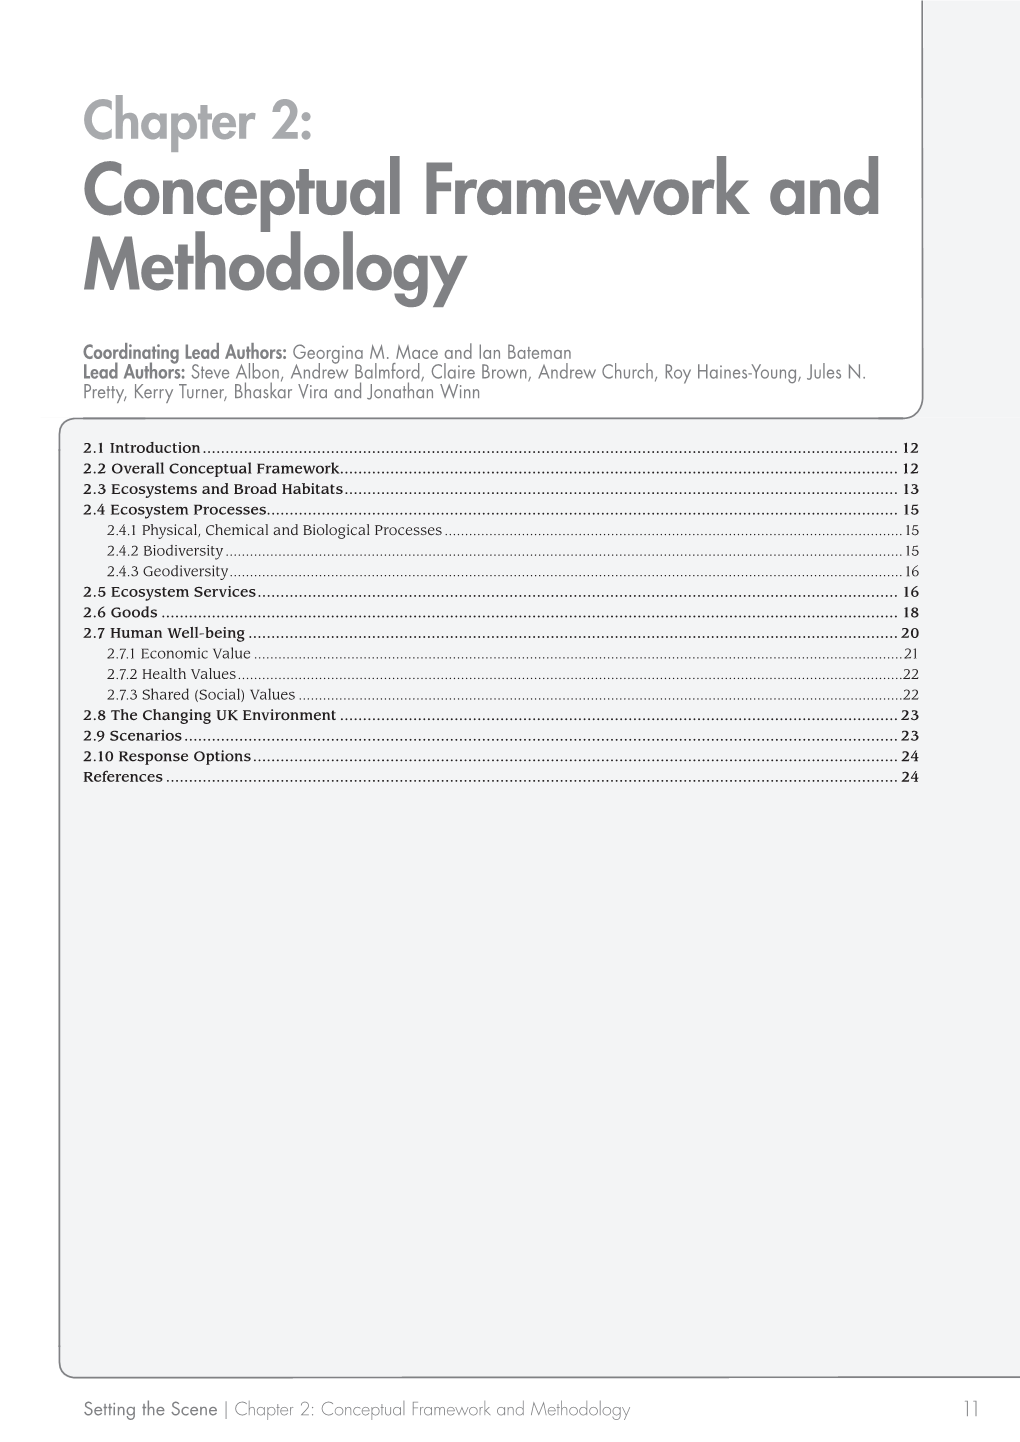 Conceptual Framework and Methodology